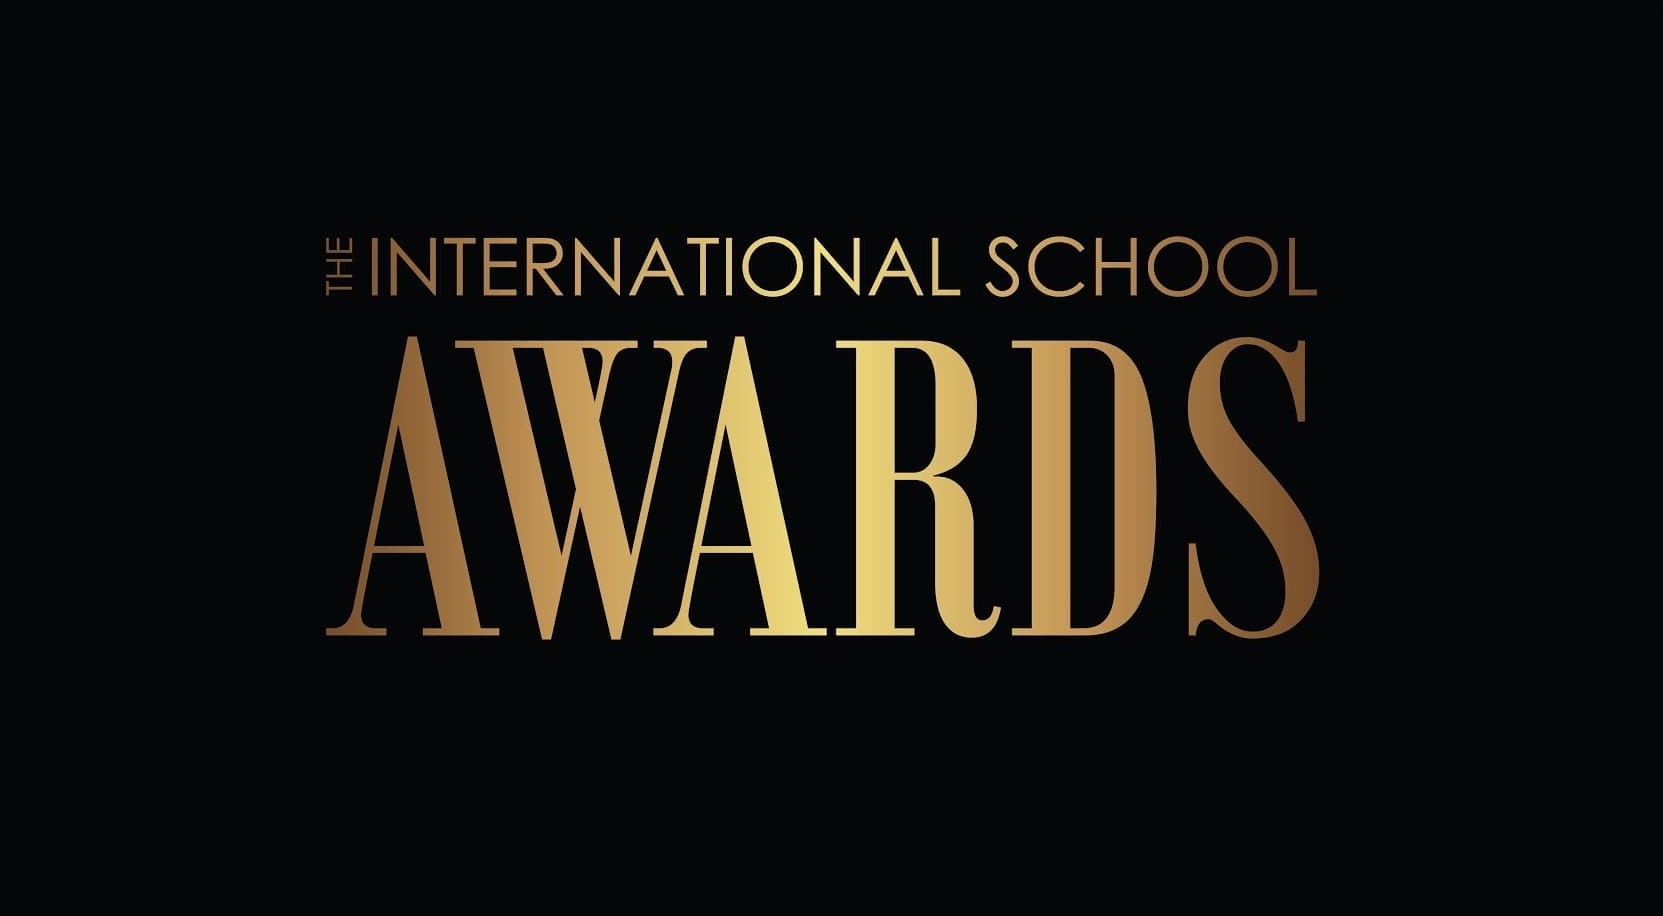 British International School of Houston wins International School Award for diversity and inclusion initiative - Houston wins International School Award